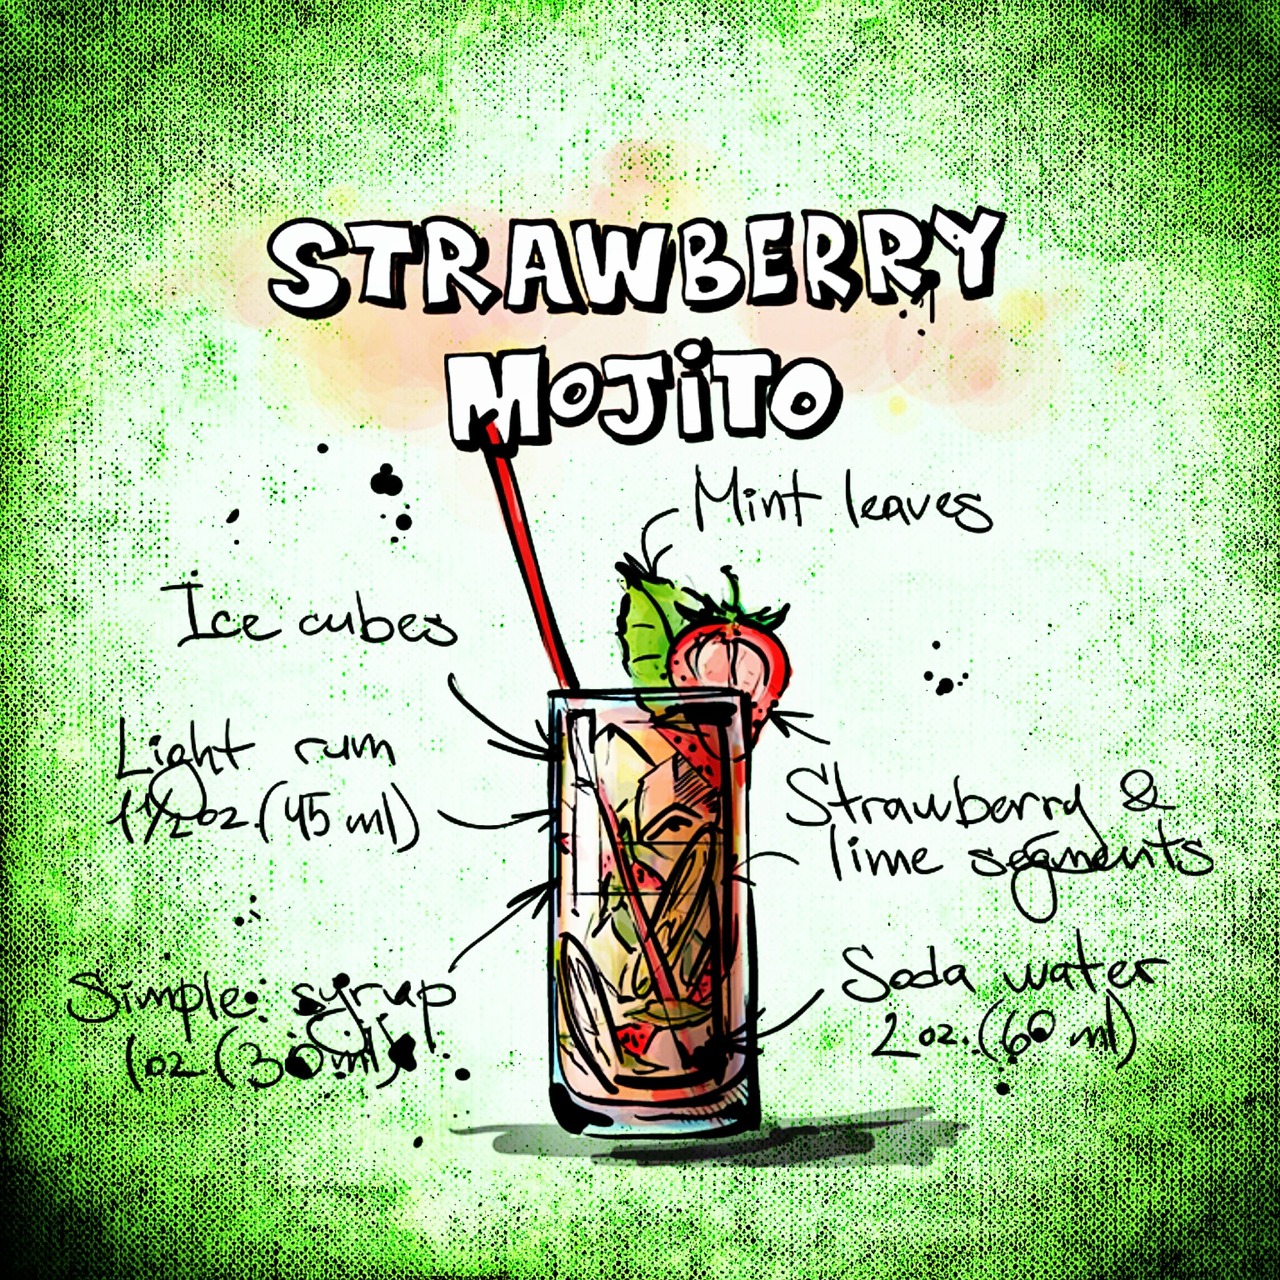 strawberry mojito cocktail drink free photo